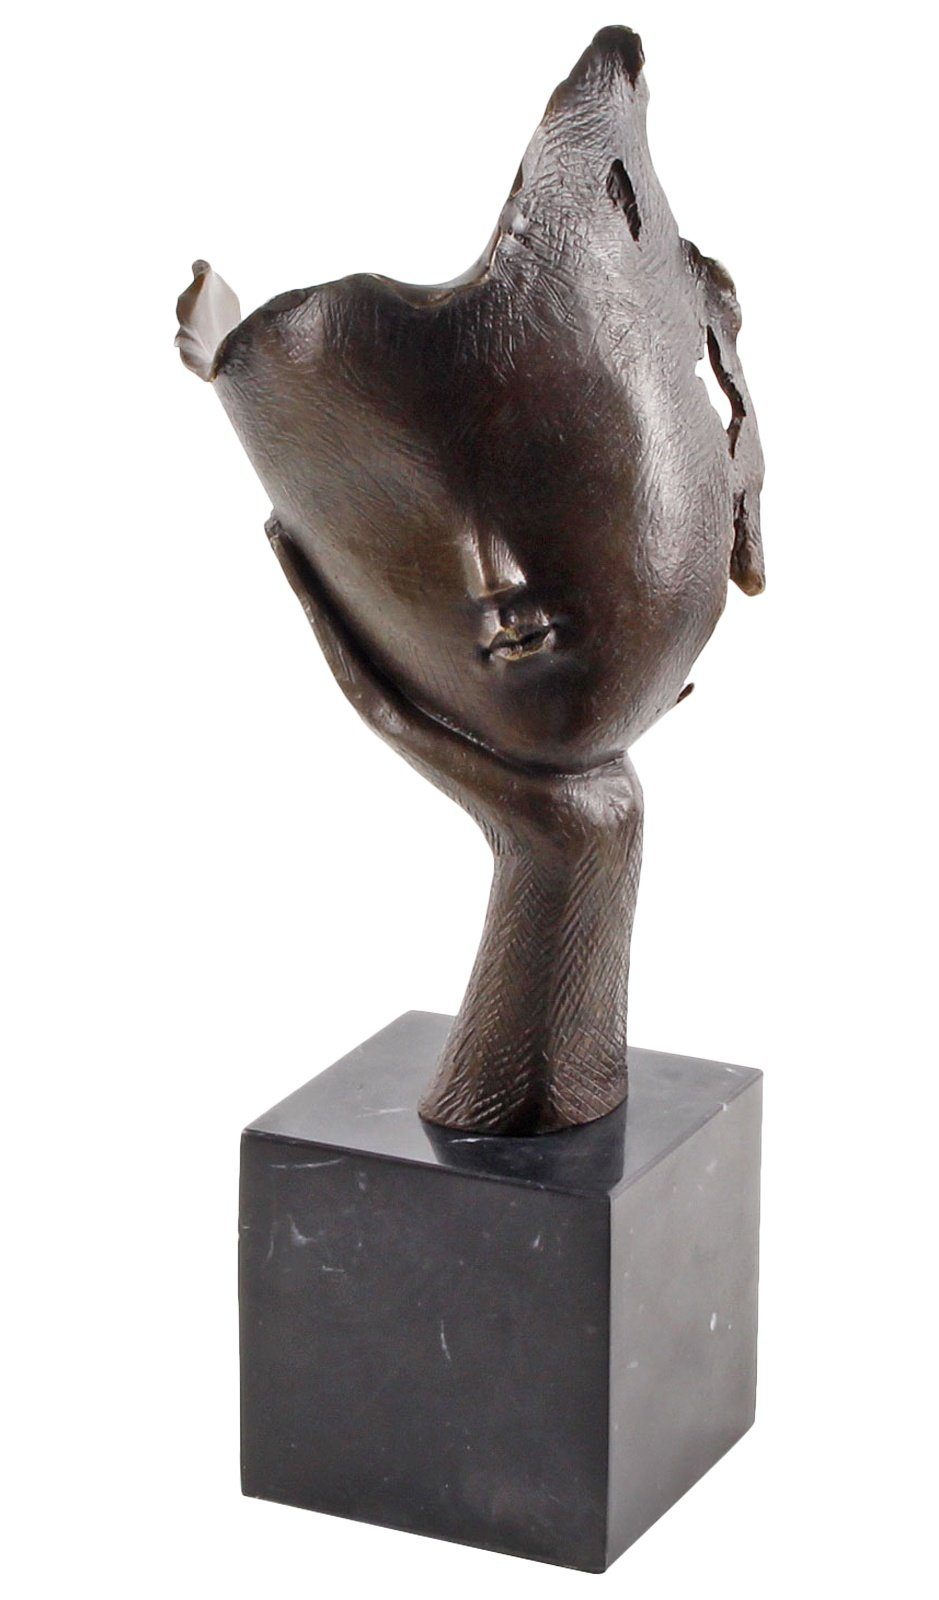 Aubaho Skulptur Bronzeskulptur Gesicht Hand Büste Denker Moderne Skulptur Figur Antik-